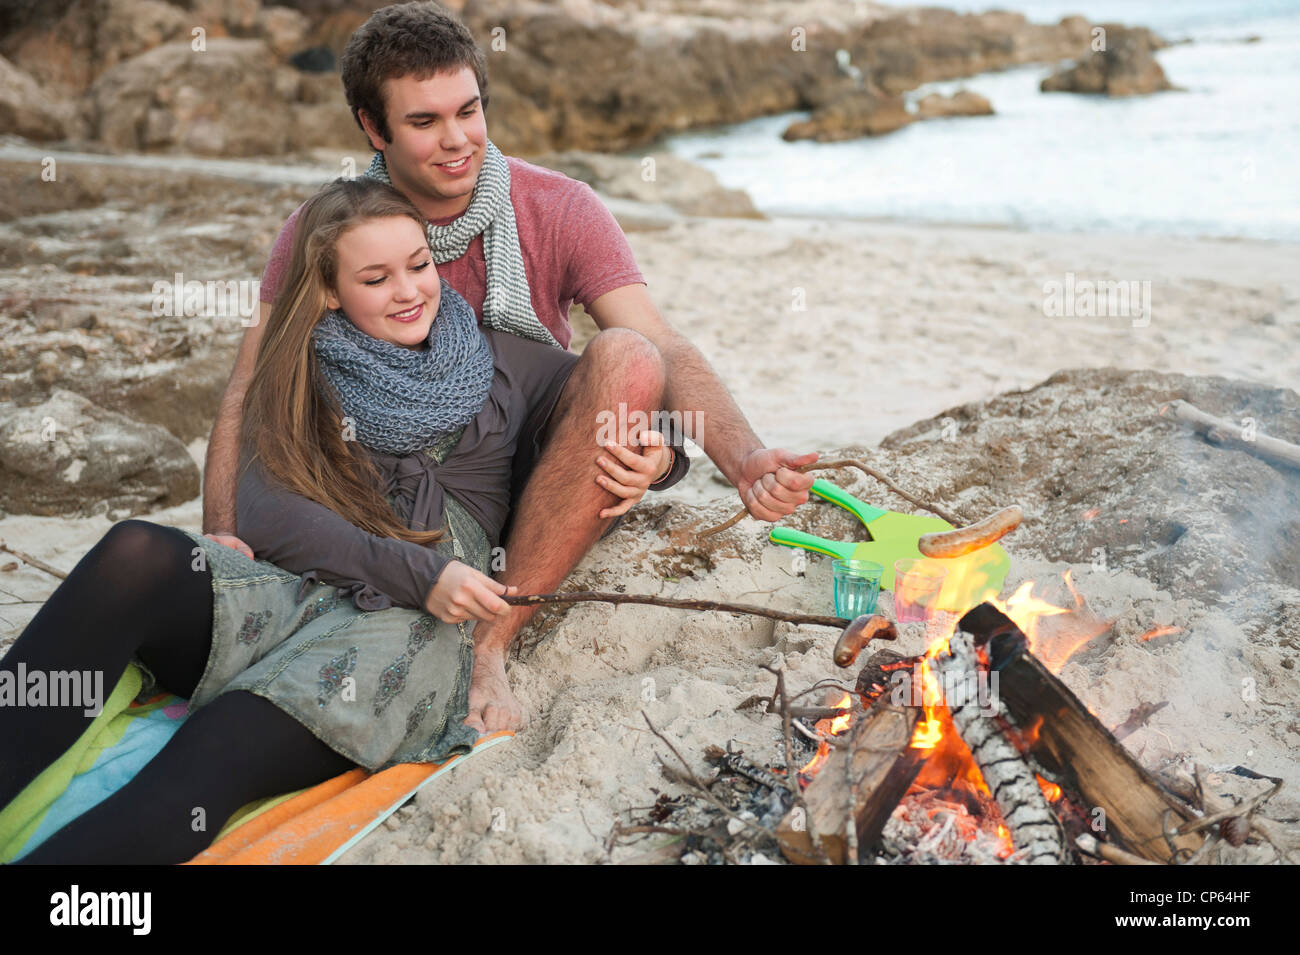 Spain, Mallorca, Couple preparing sausages on beach, smiling Stock Photo